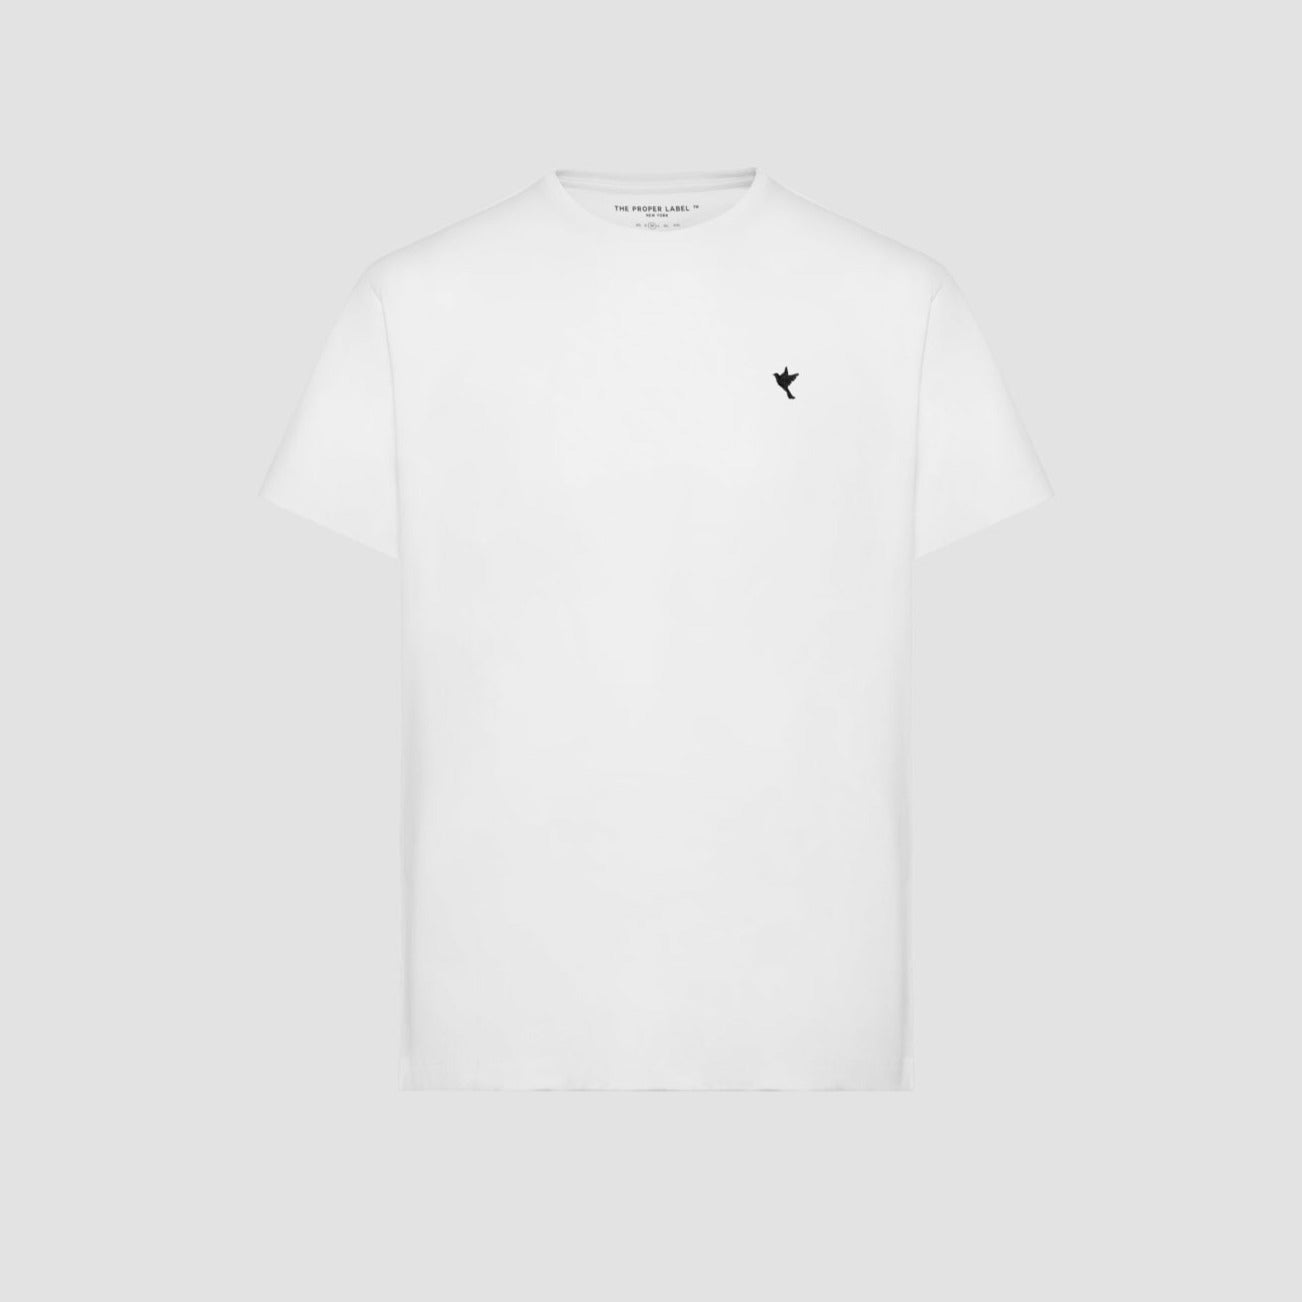 The Proper Tee Shirt ™ White Regular Fit Organic Cotton Crewneck T-Shirt - The Proper Label ™